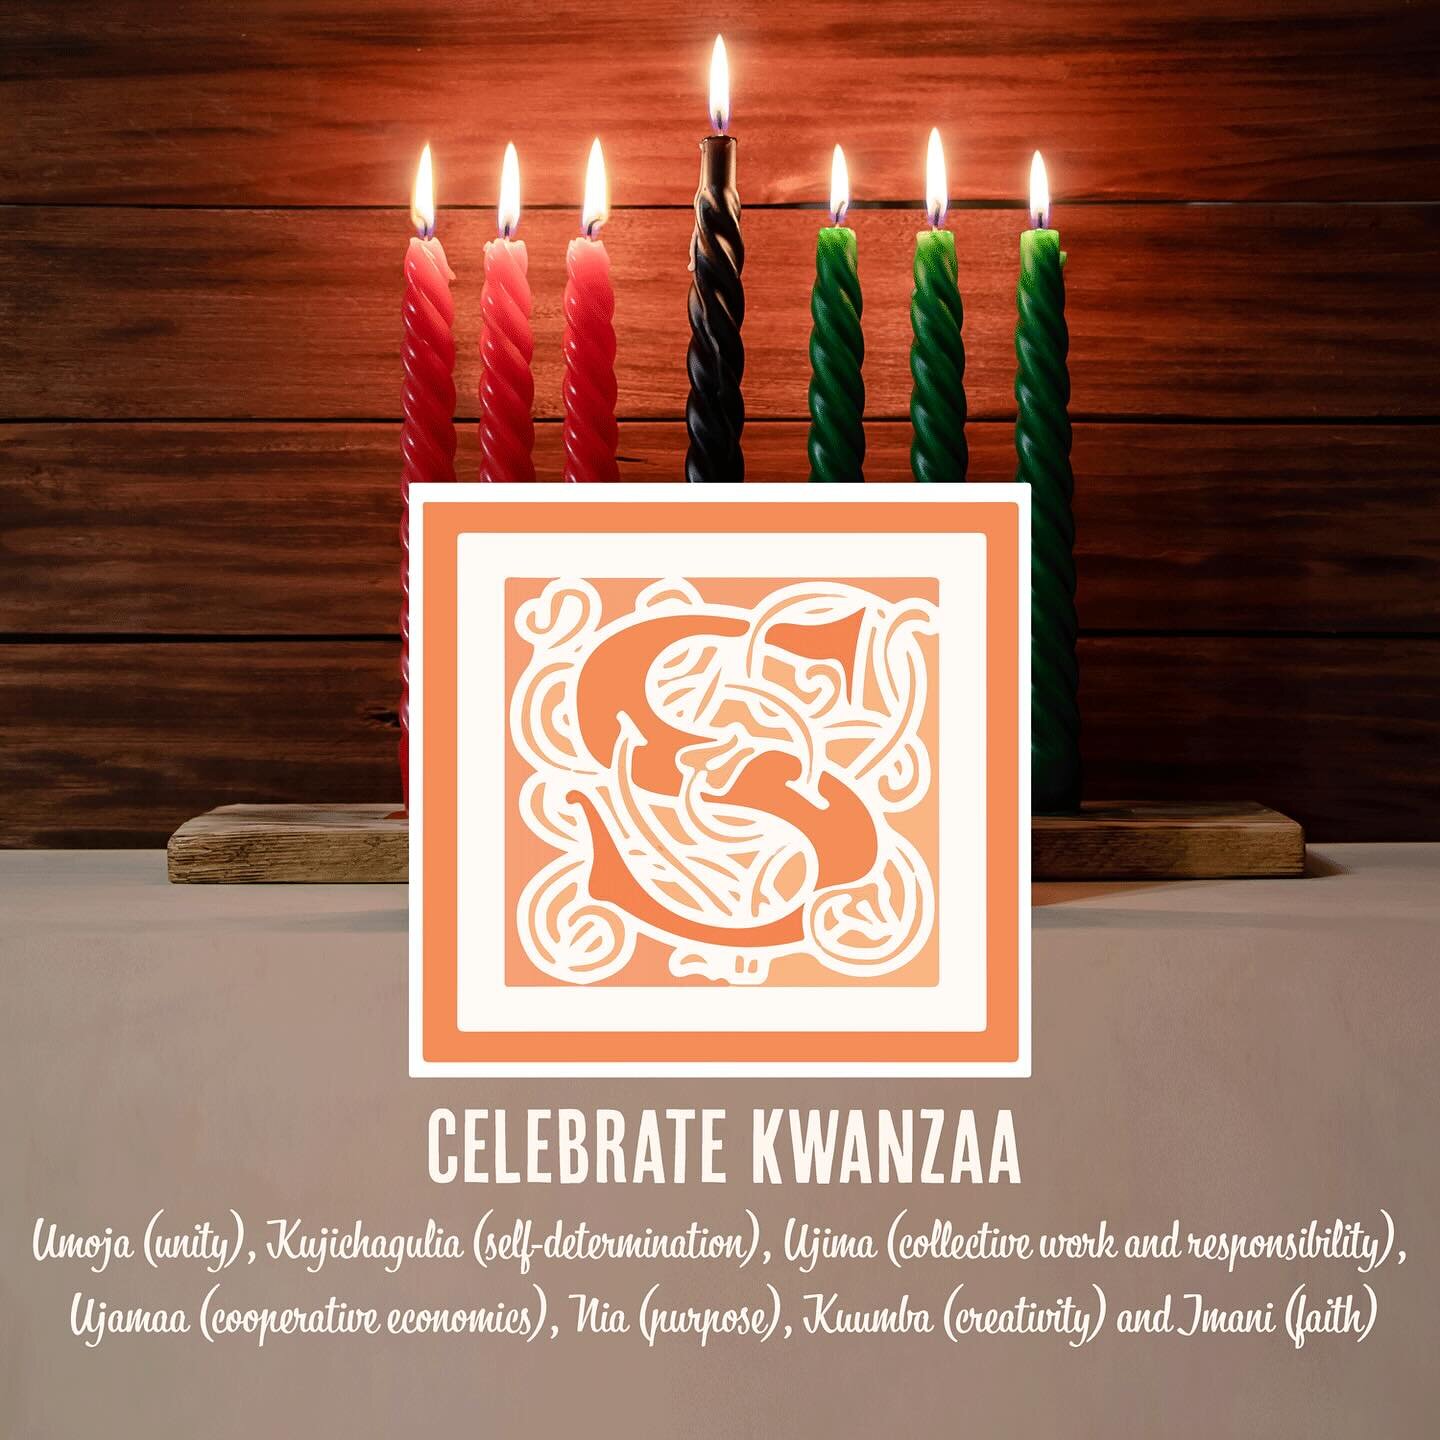 Celebrating the seven principles of Kwanzaa!